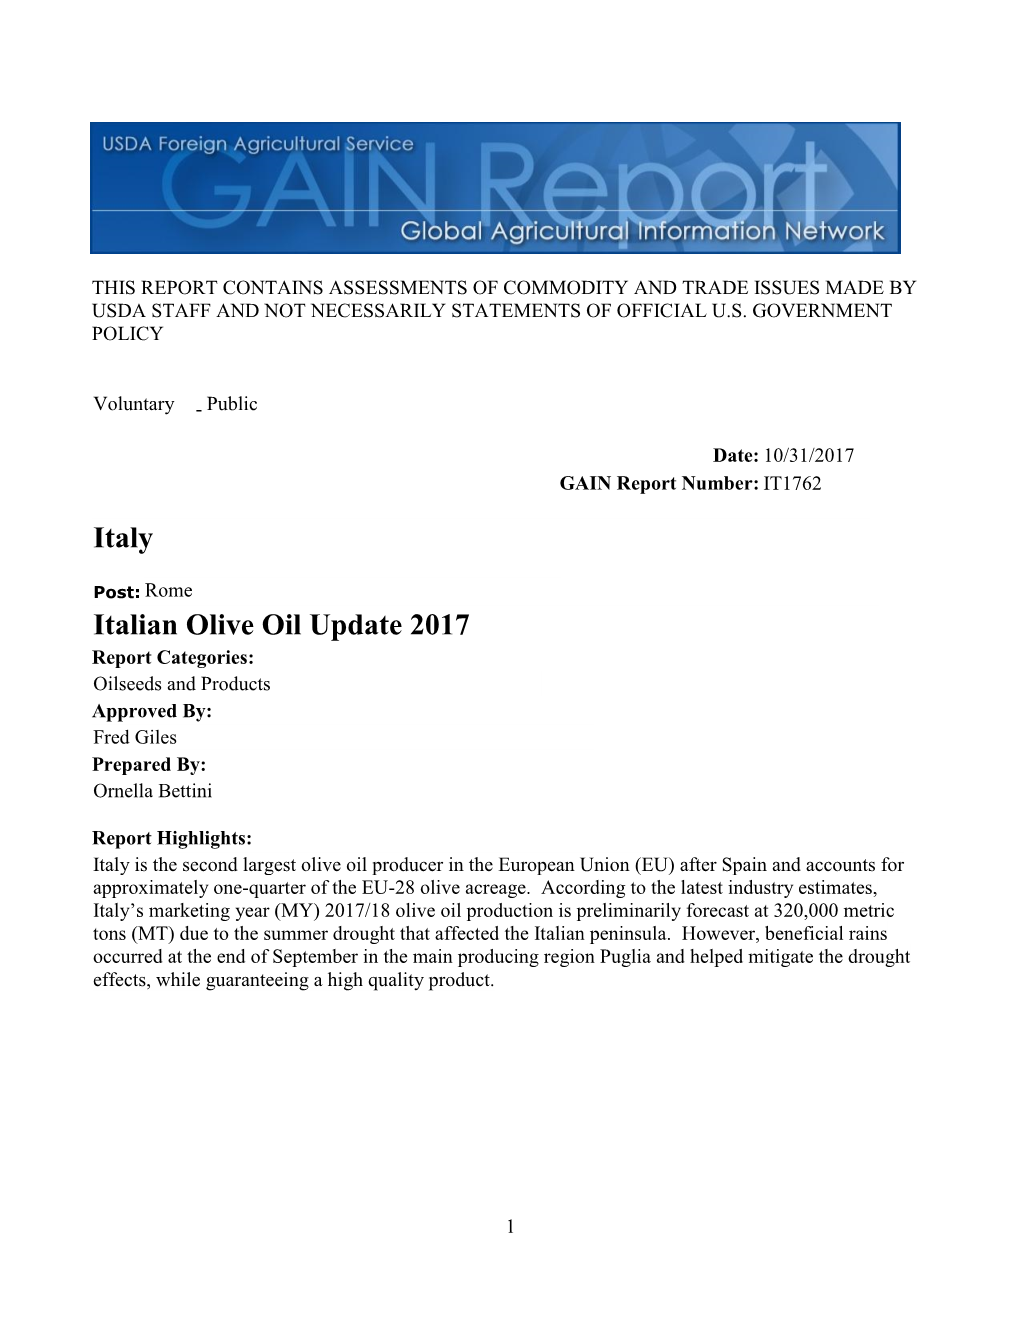 Italian Olive Oil Update 2017 Italy